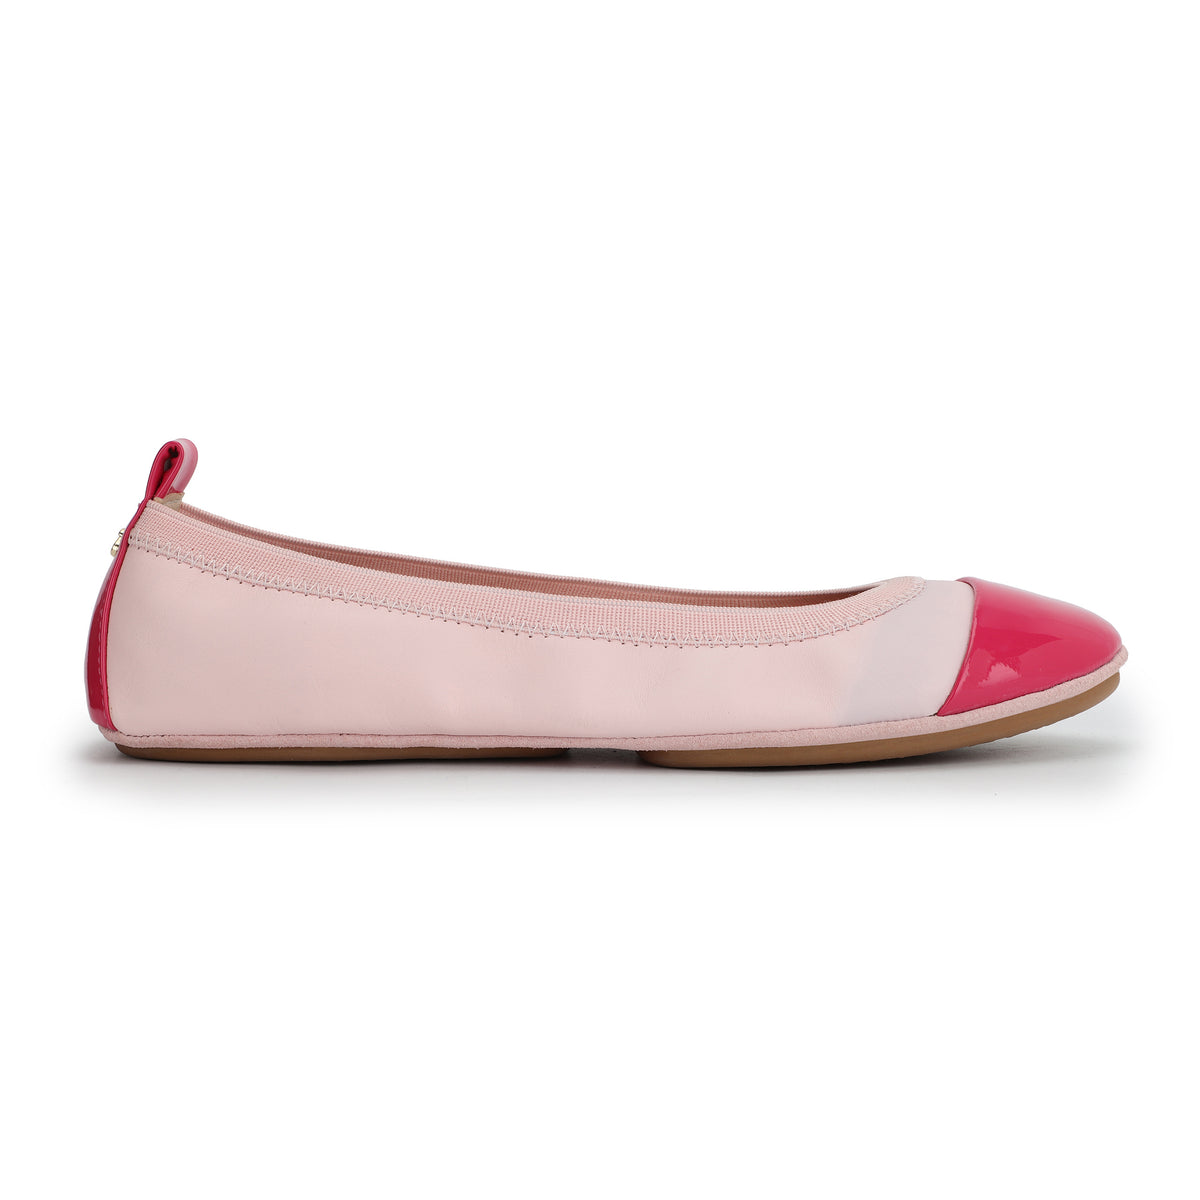 Samantha Foldable Ballet Flat in Light Pink / Hot Pink